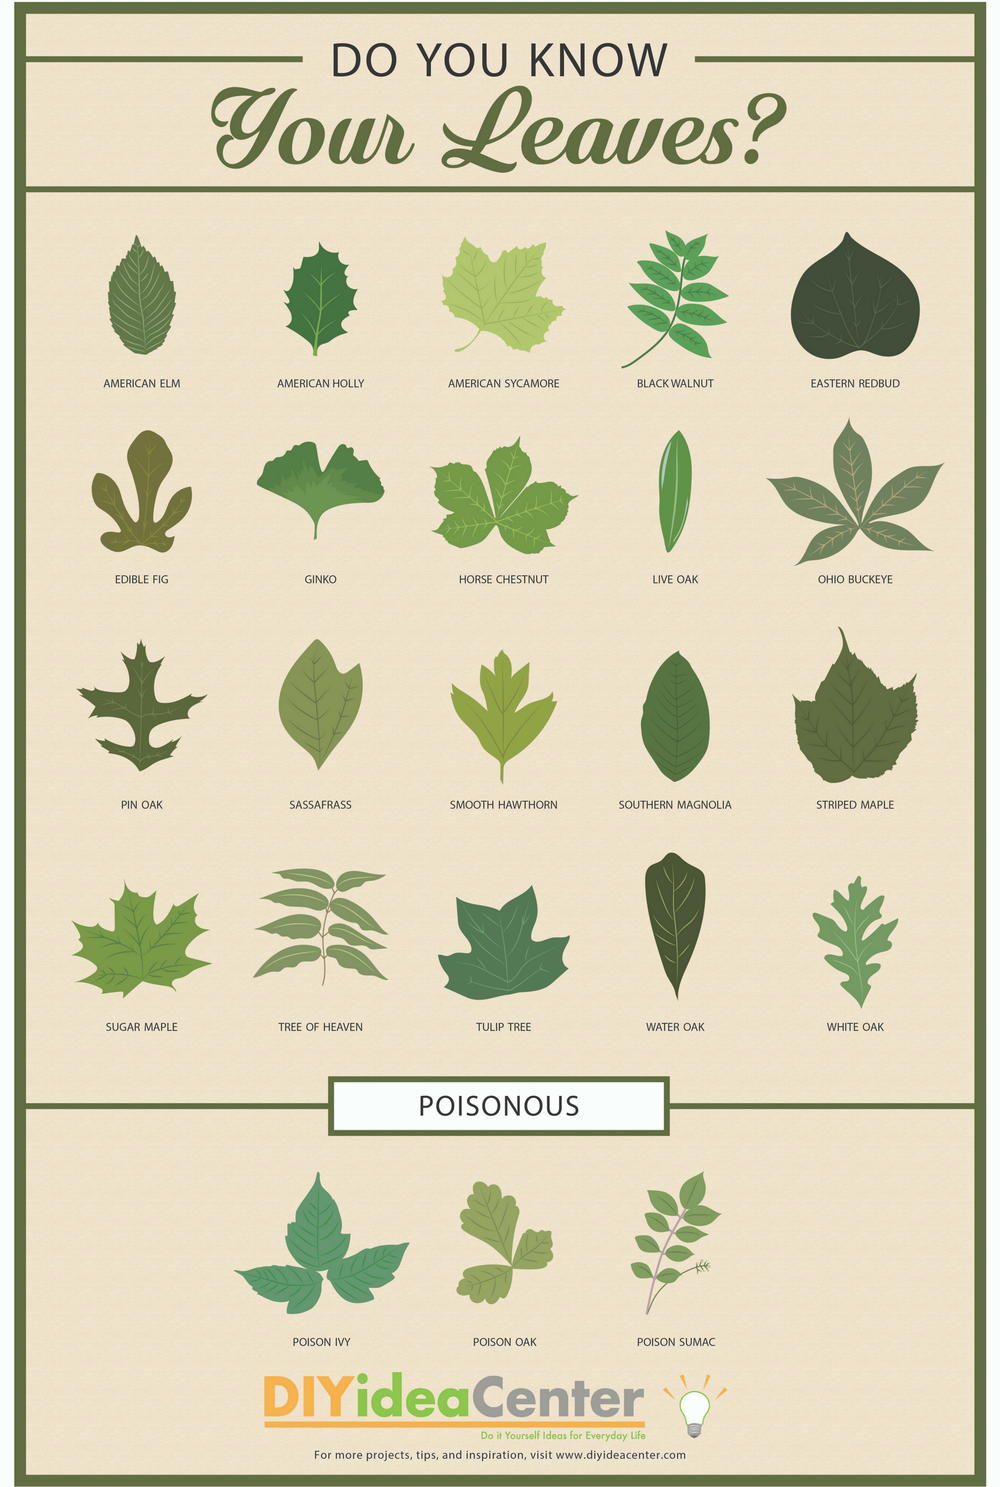 tree identification leaf guide